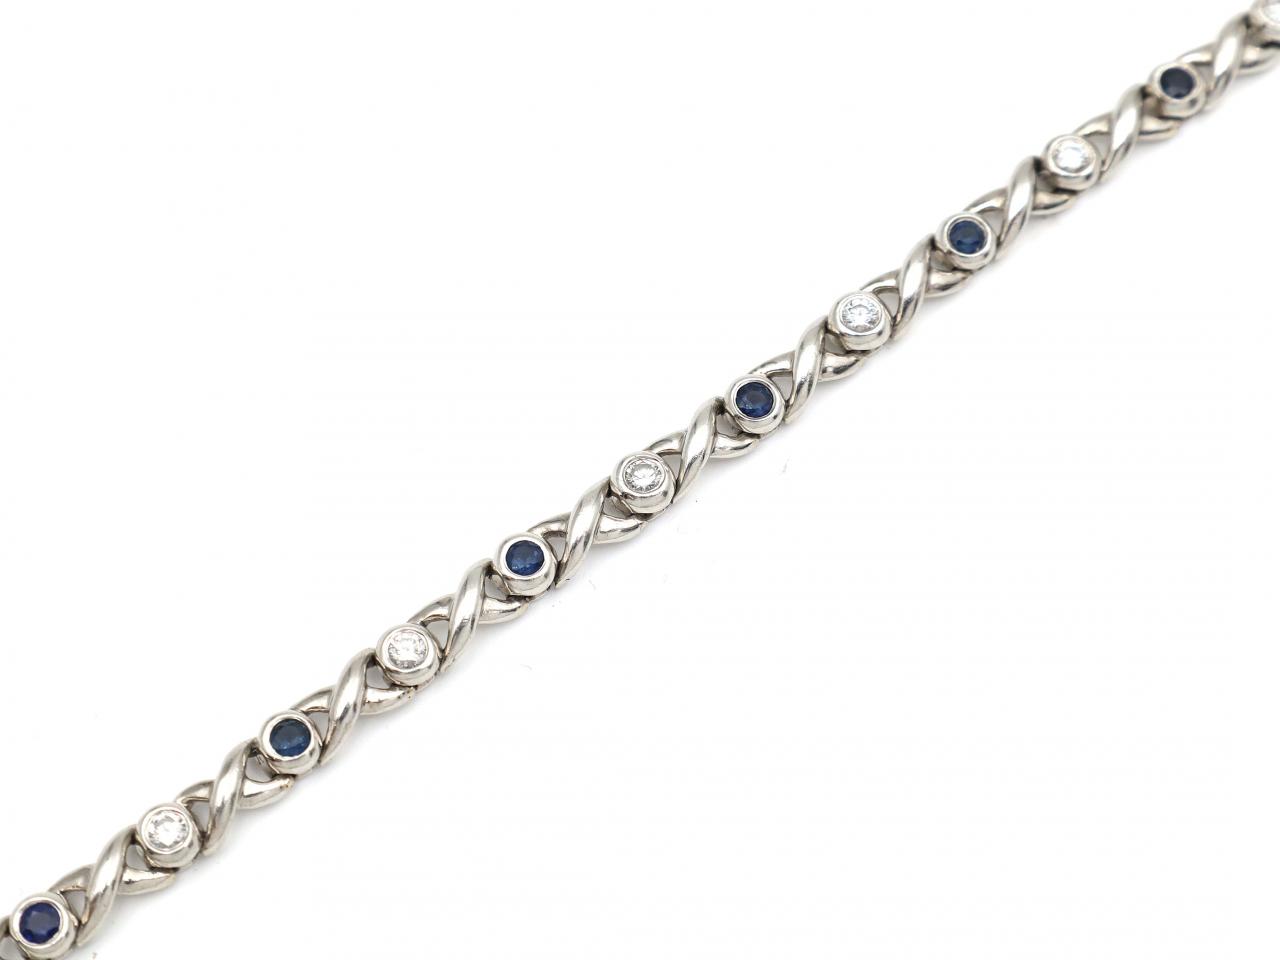 Platinum Diamond Bracelet for Women JL PTB 744